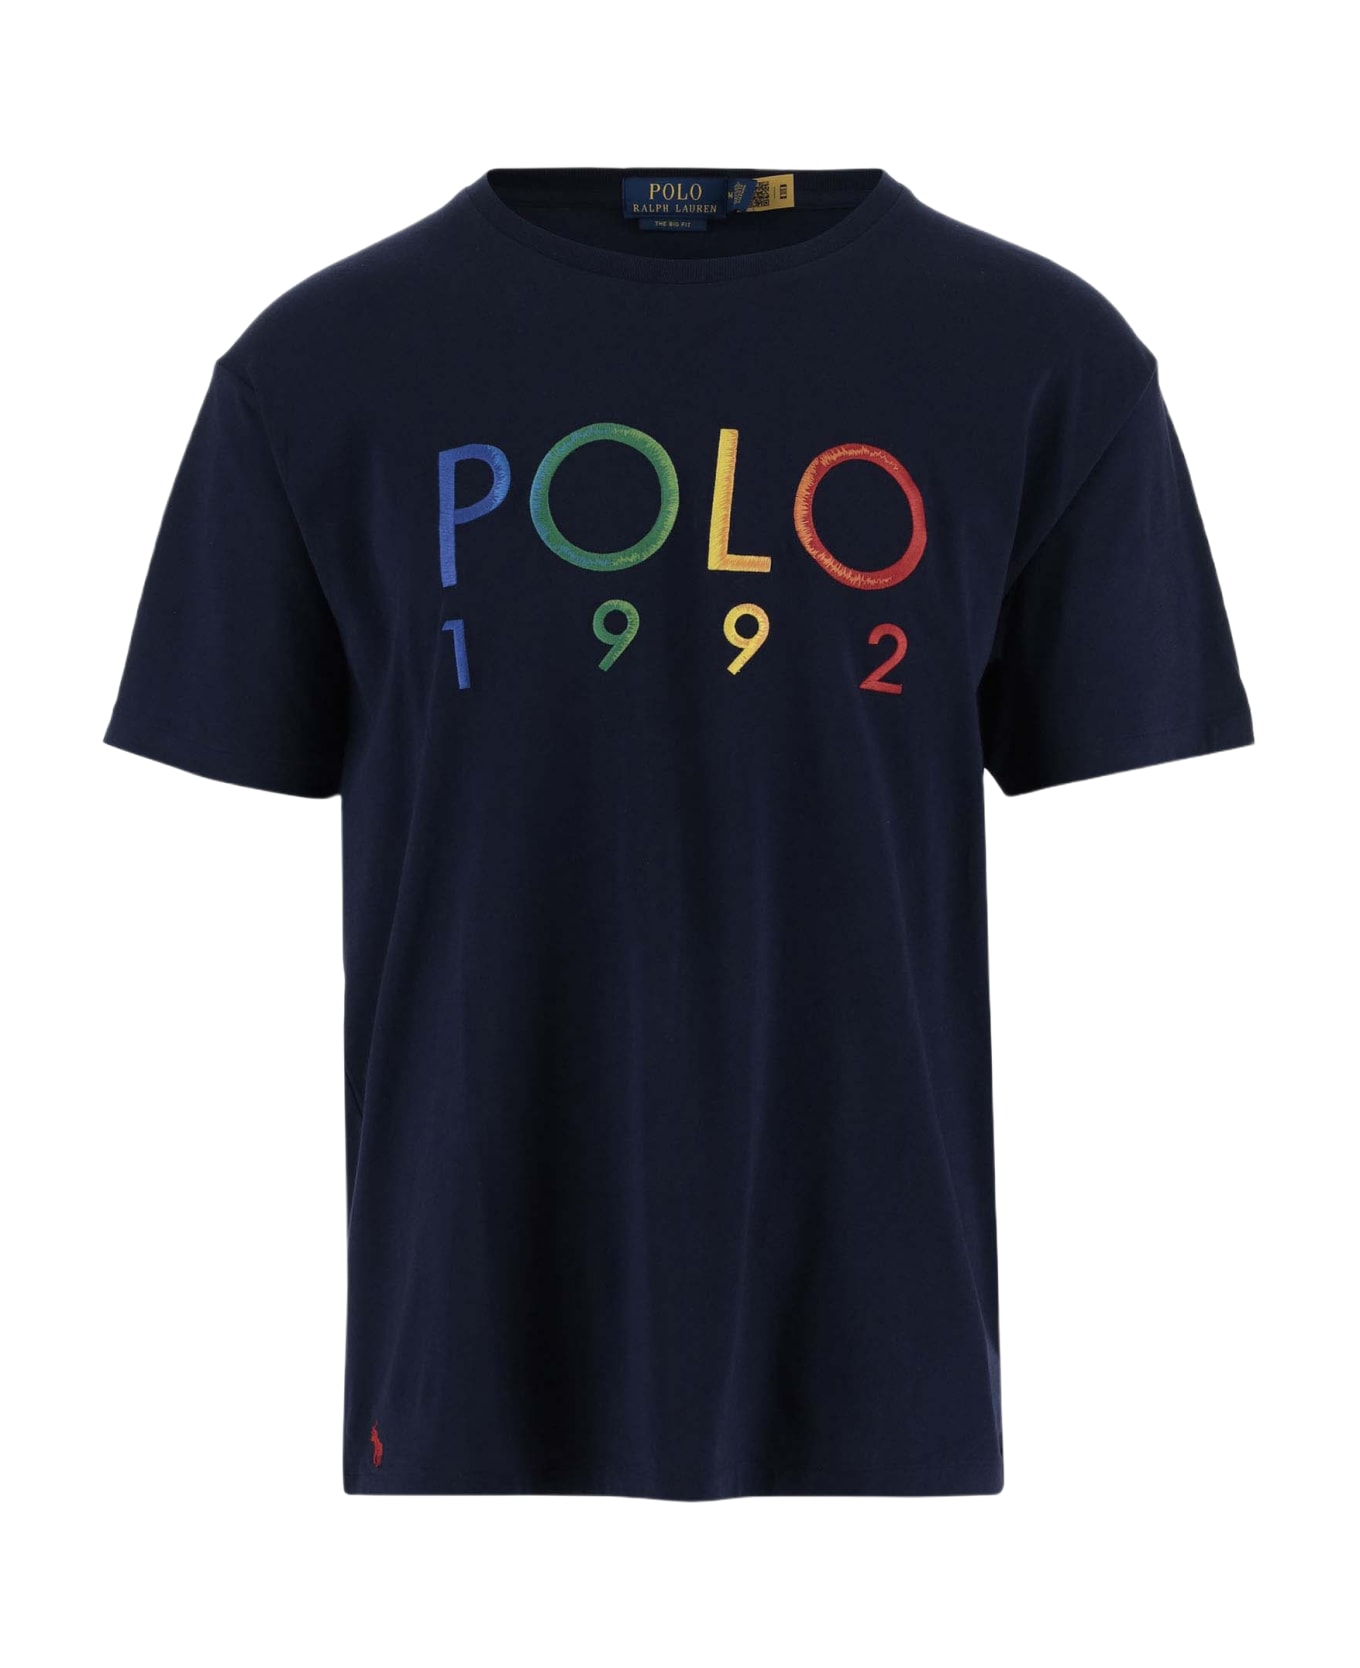 Polo Ralph Lauren Cotton T-shirt With Logo - Cruise navy